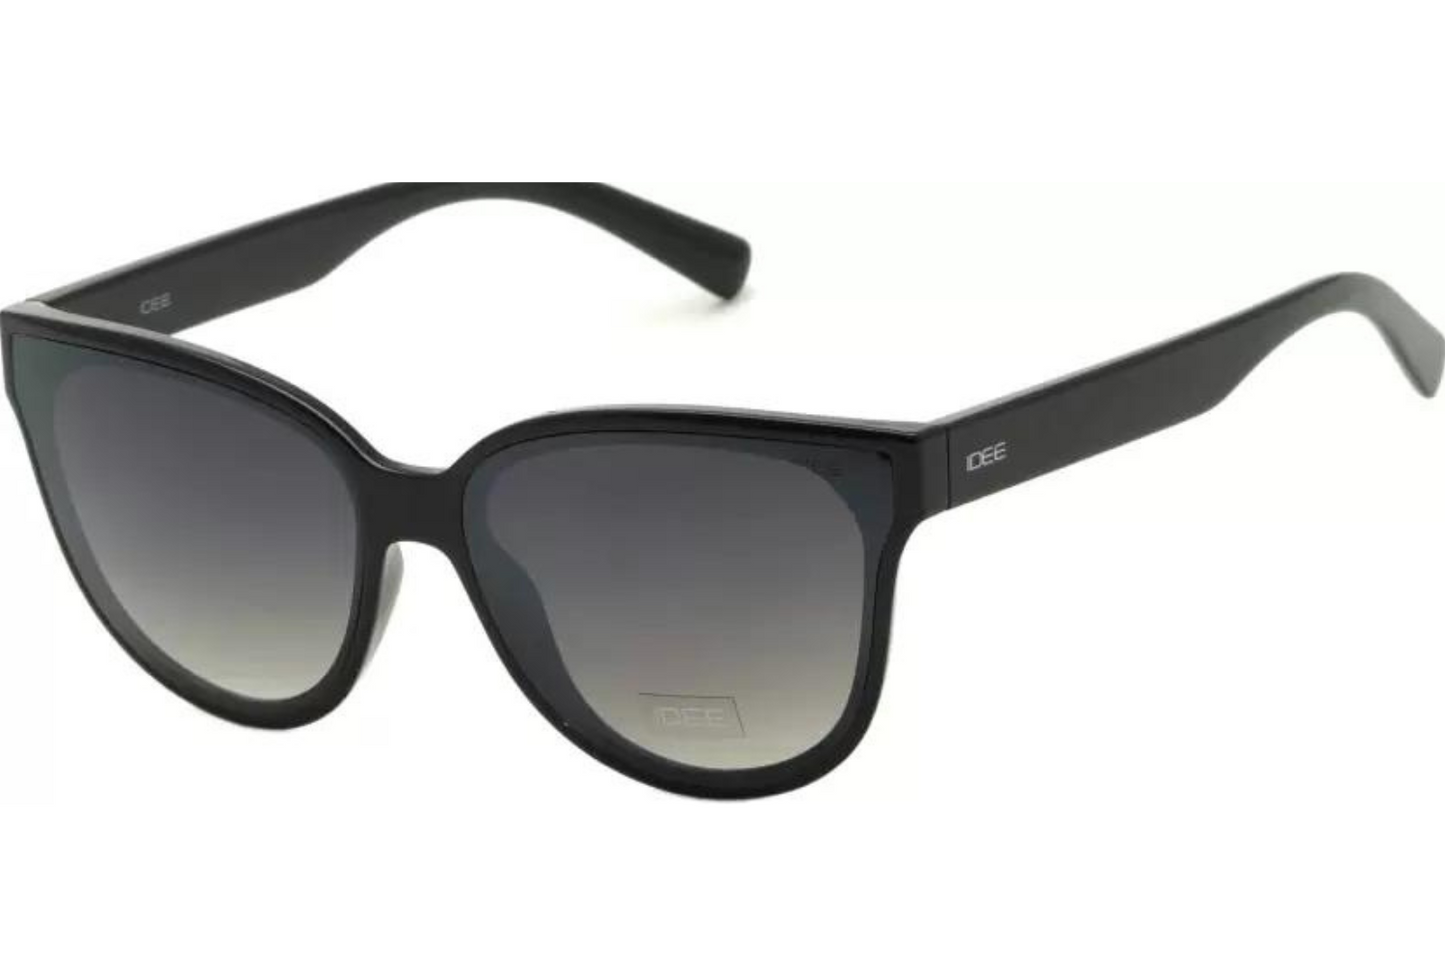 IDEE Sunglasses S2414 C4